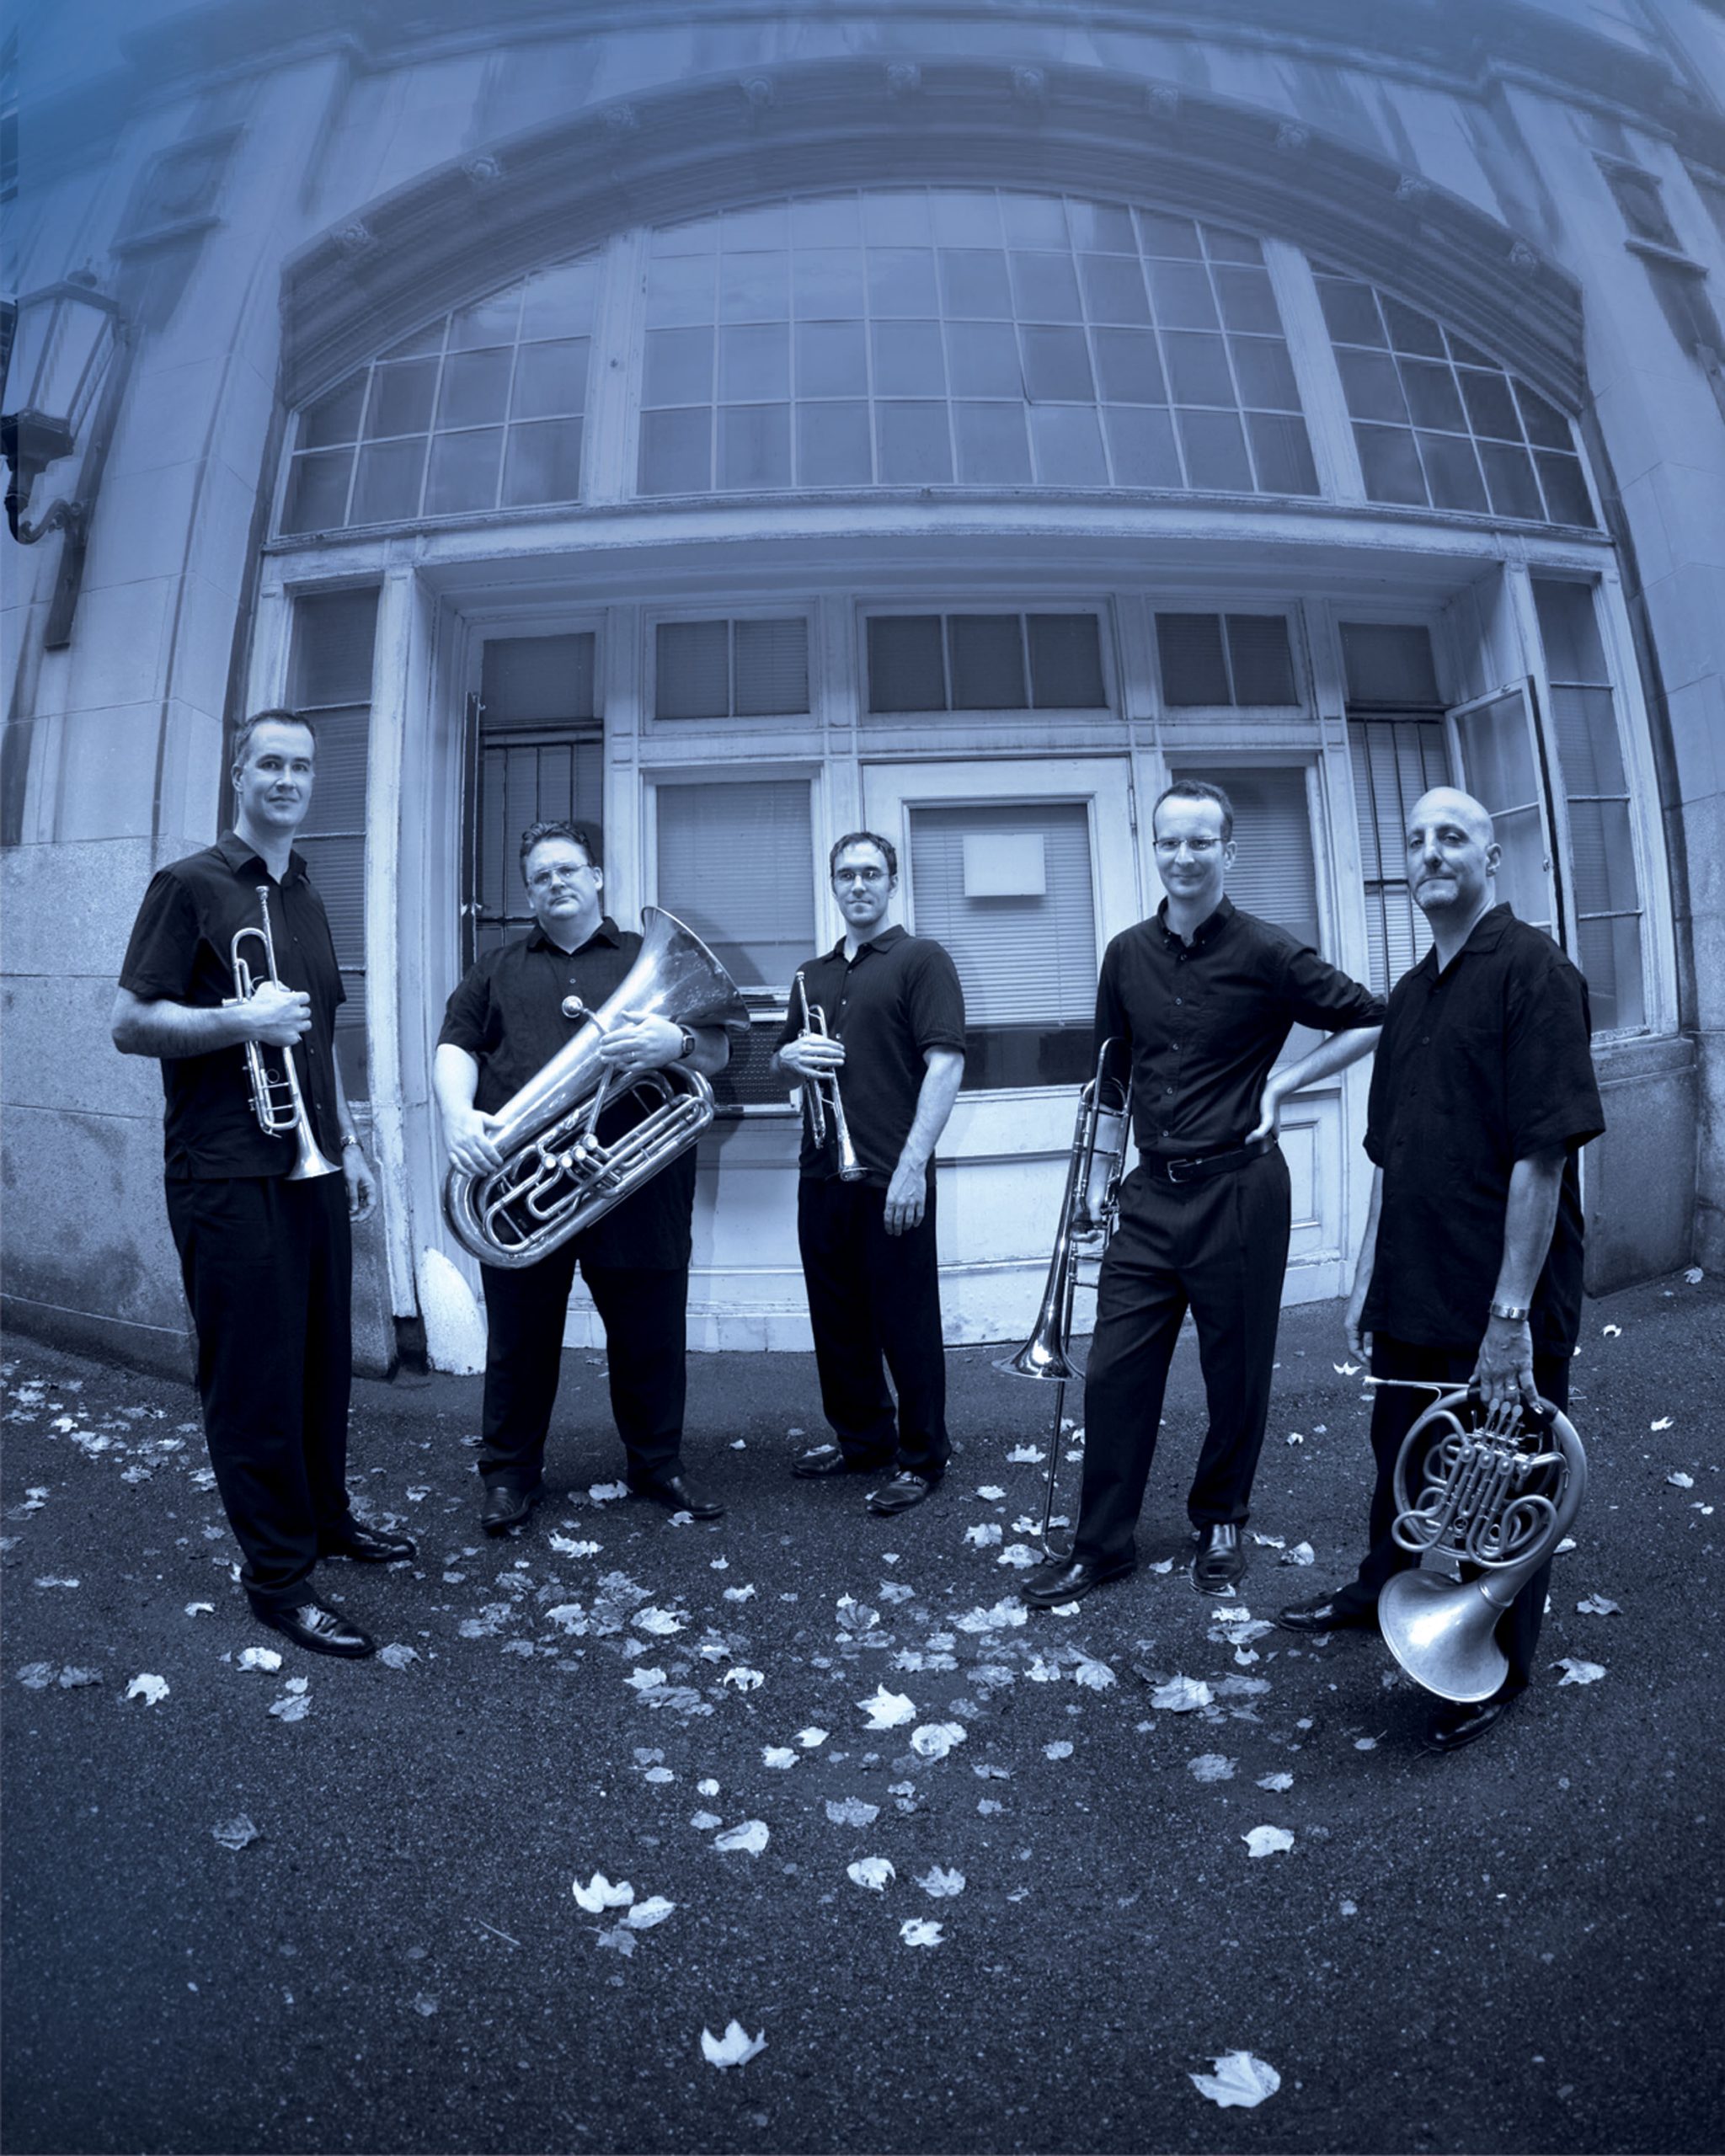 Atlantic Brass Quintet